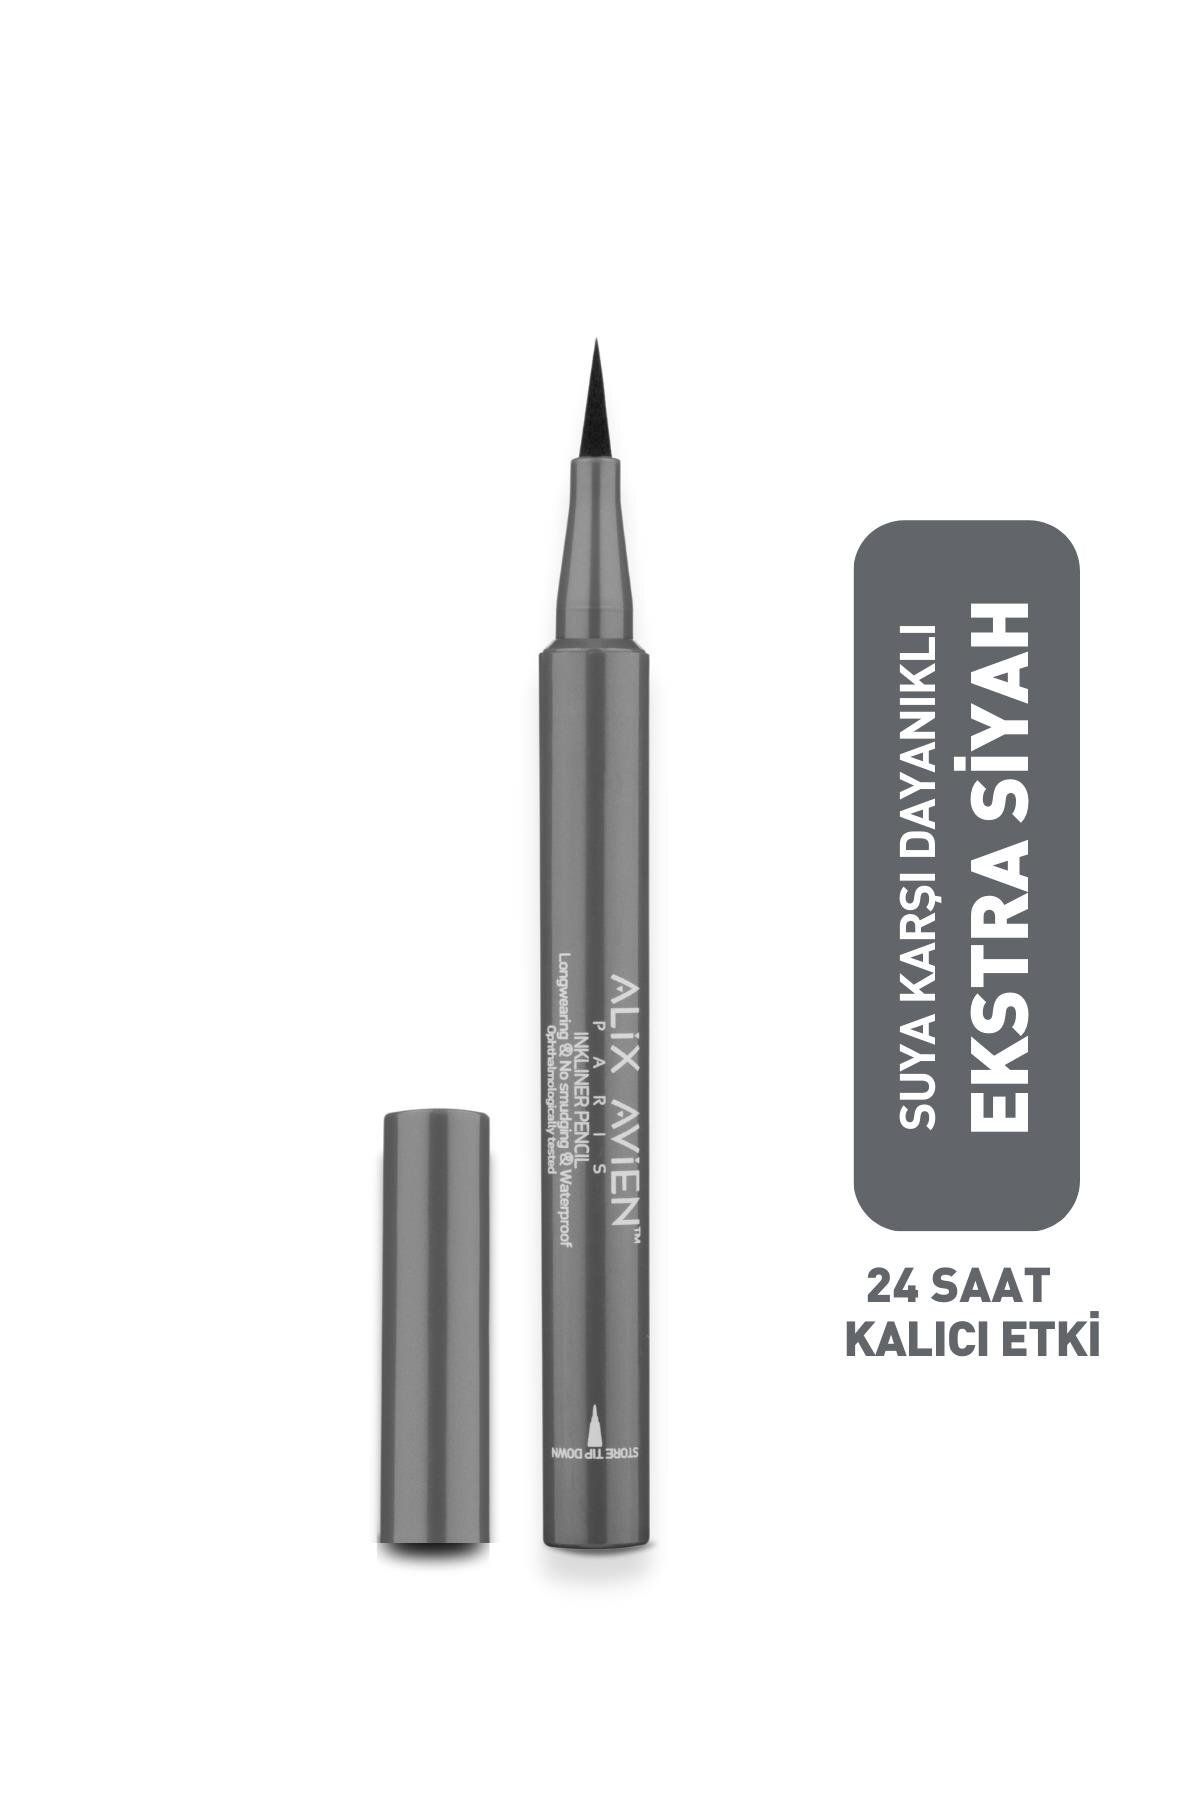 Alix Avien Eyeliner Ekstra Siyah 24 Saat Kalıcılık - Ink Liner eyeliner Pencil